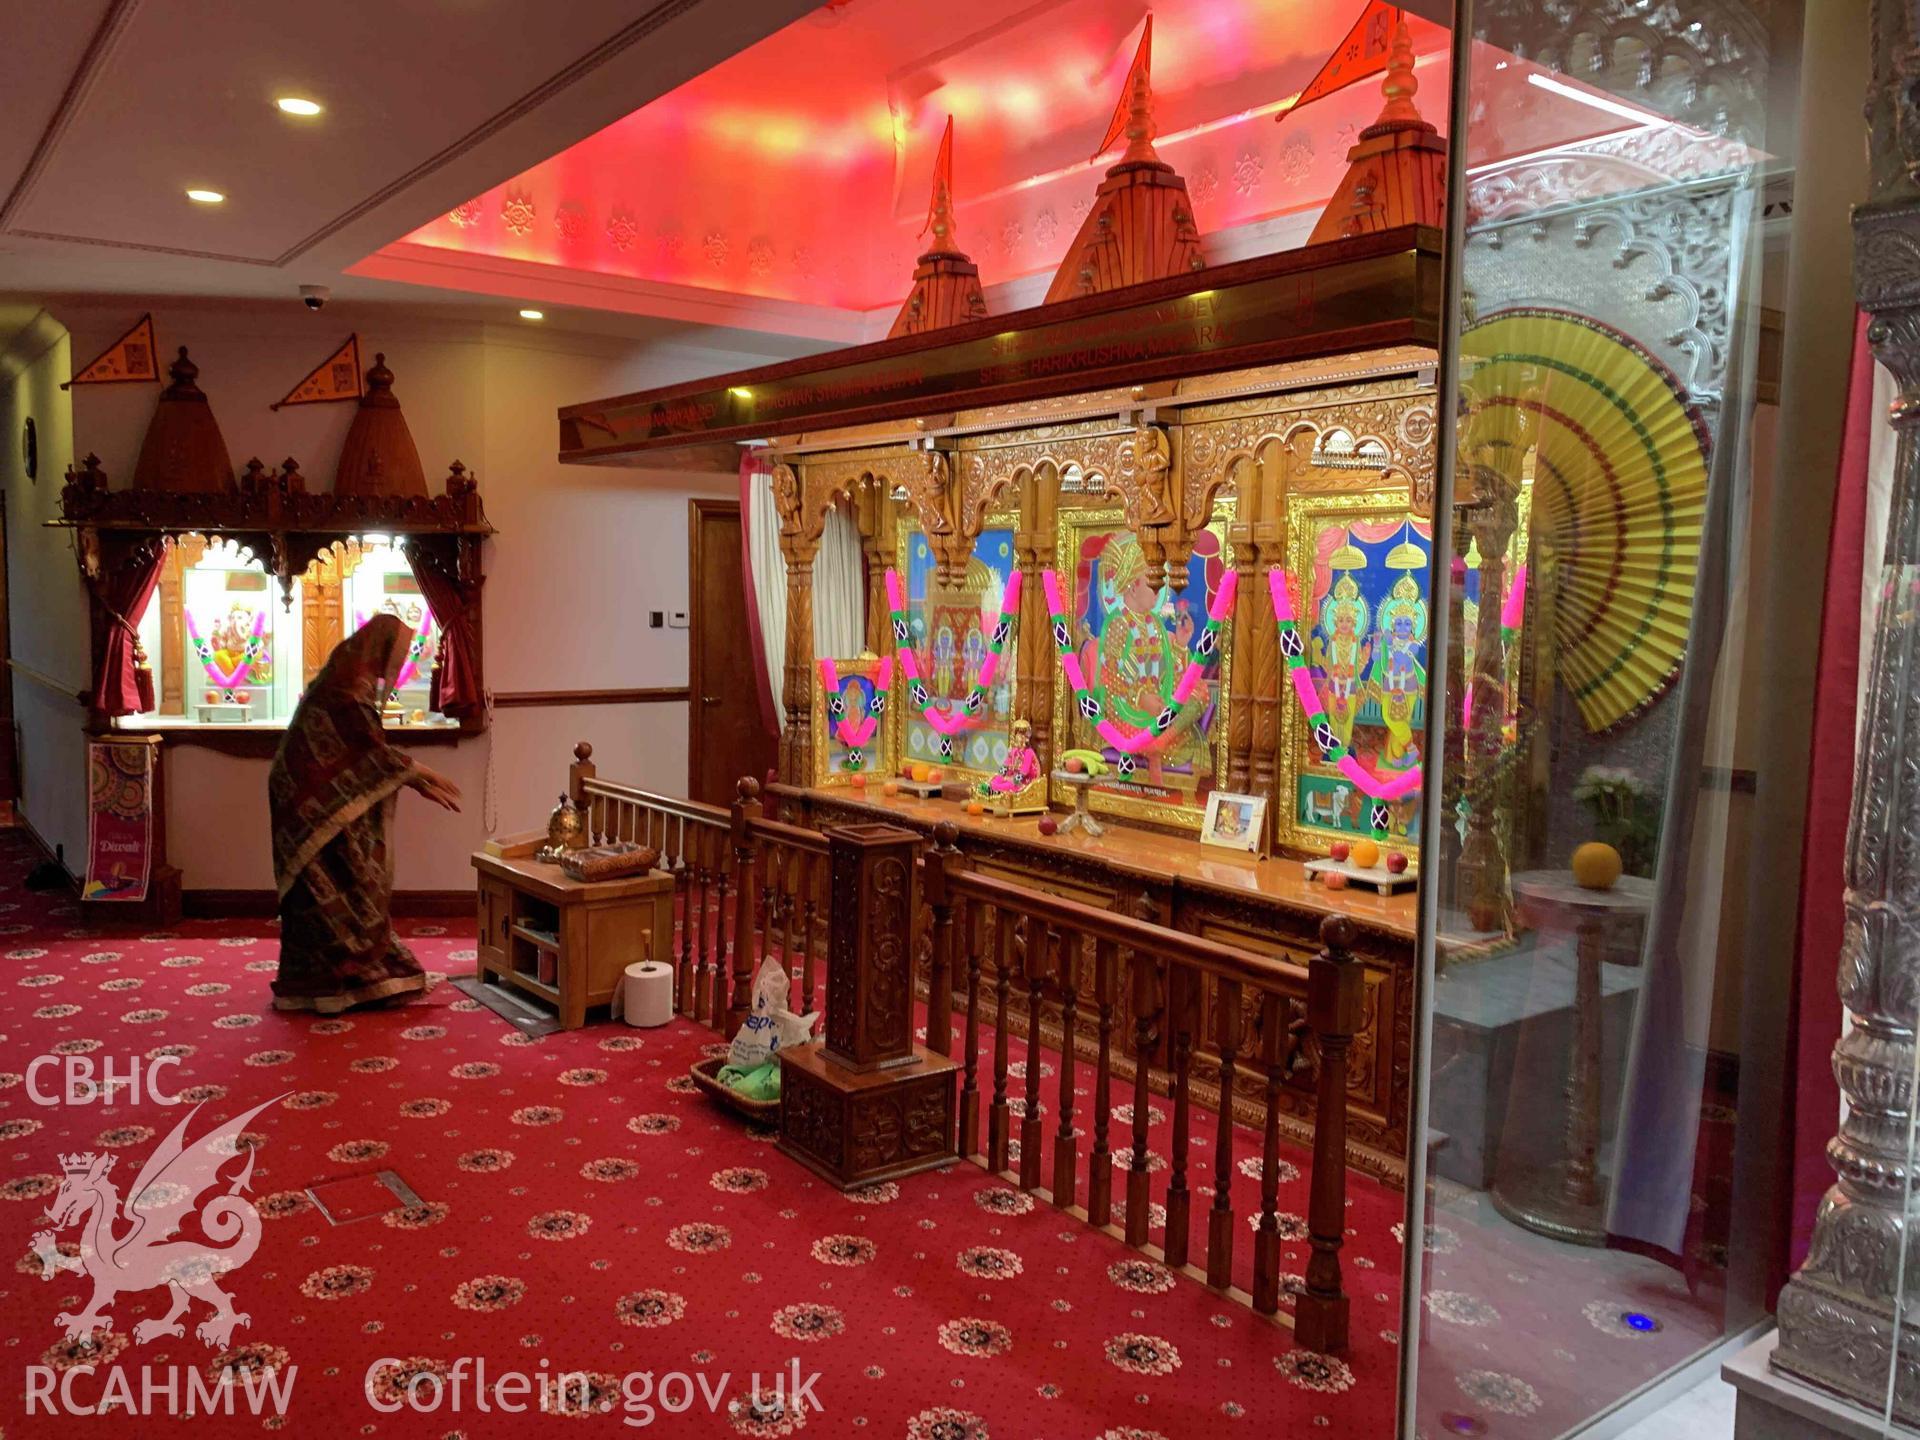 Photograph showing shrines in Shri Swaminaryan temple, Cardiff, taken in November 2021.